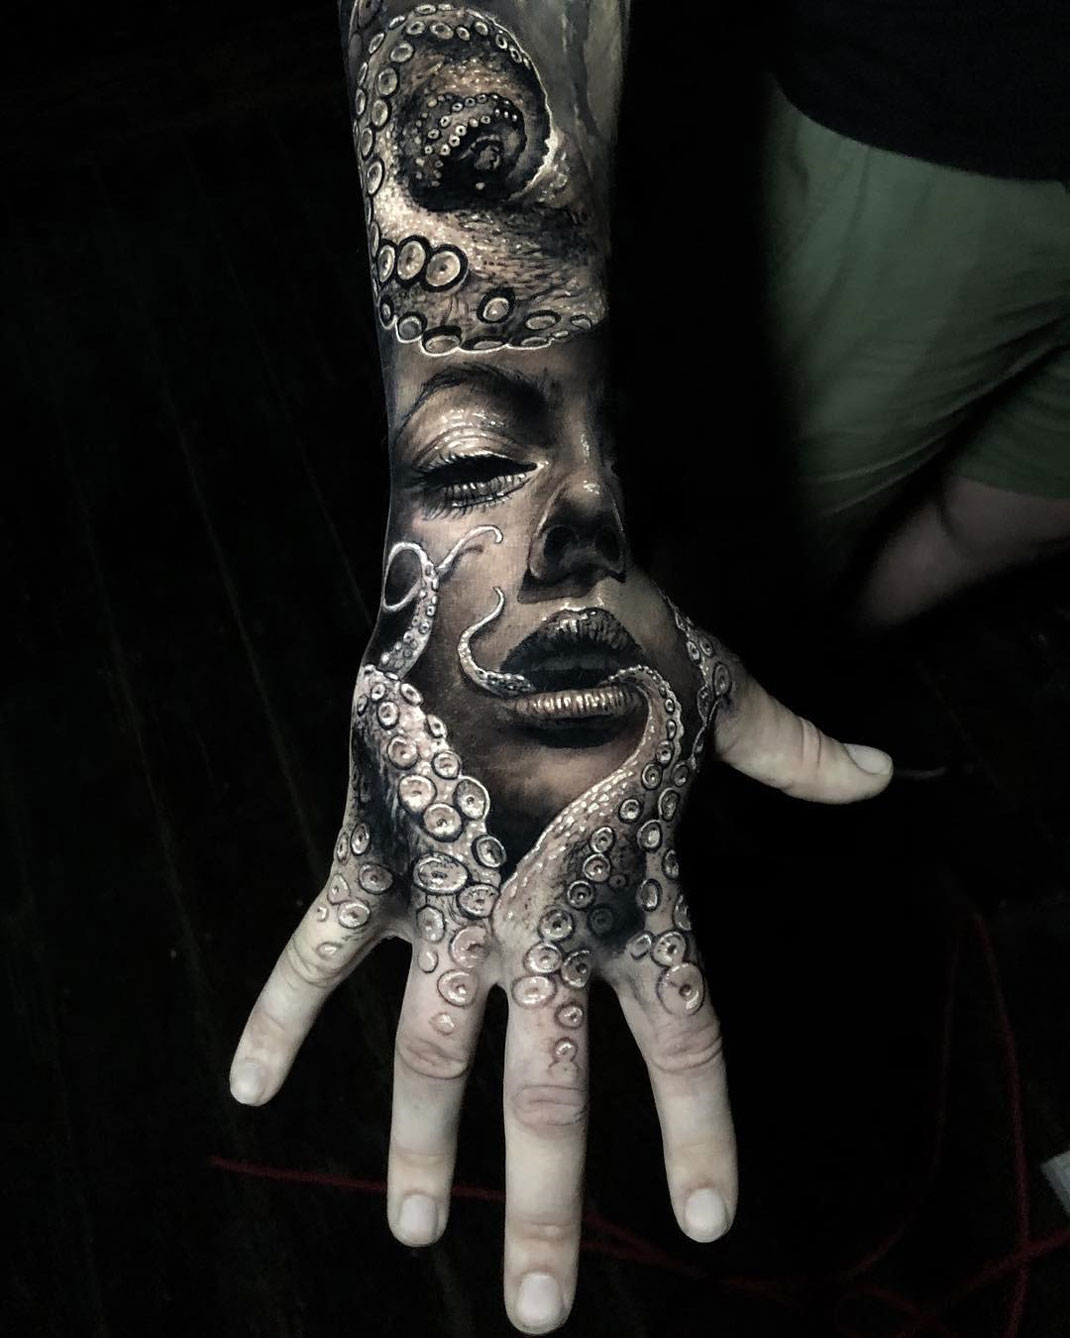 Portrait & octopus hand tattoo